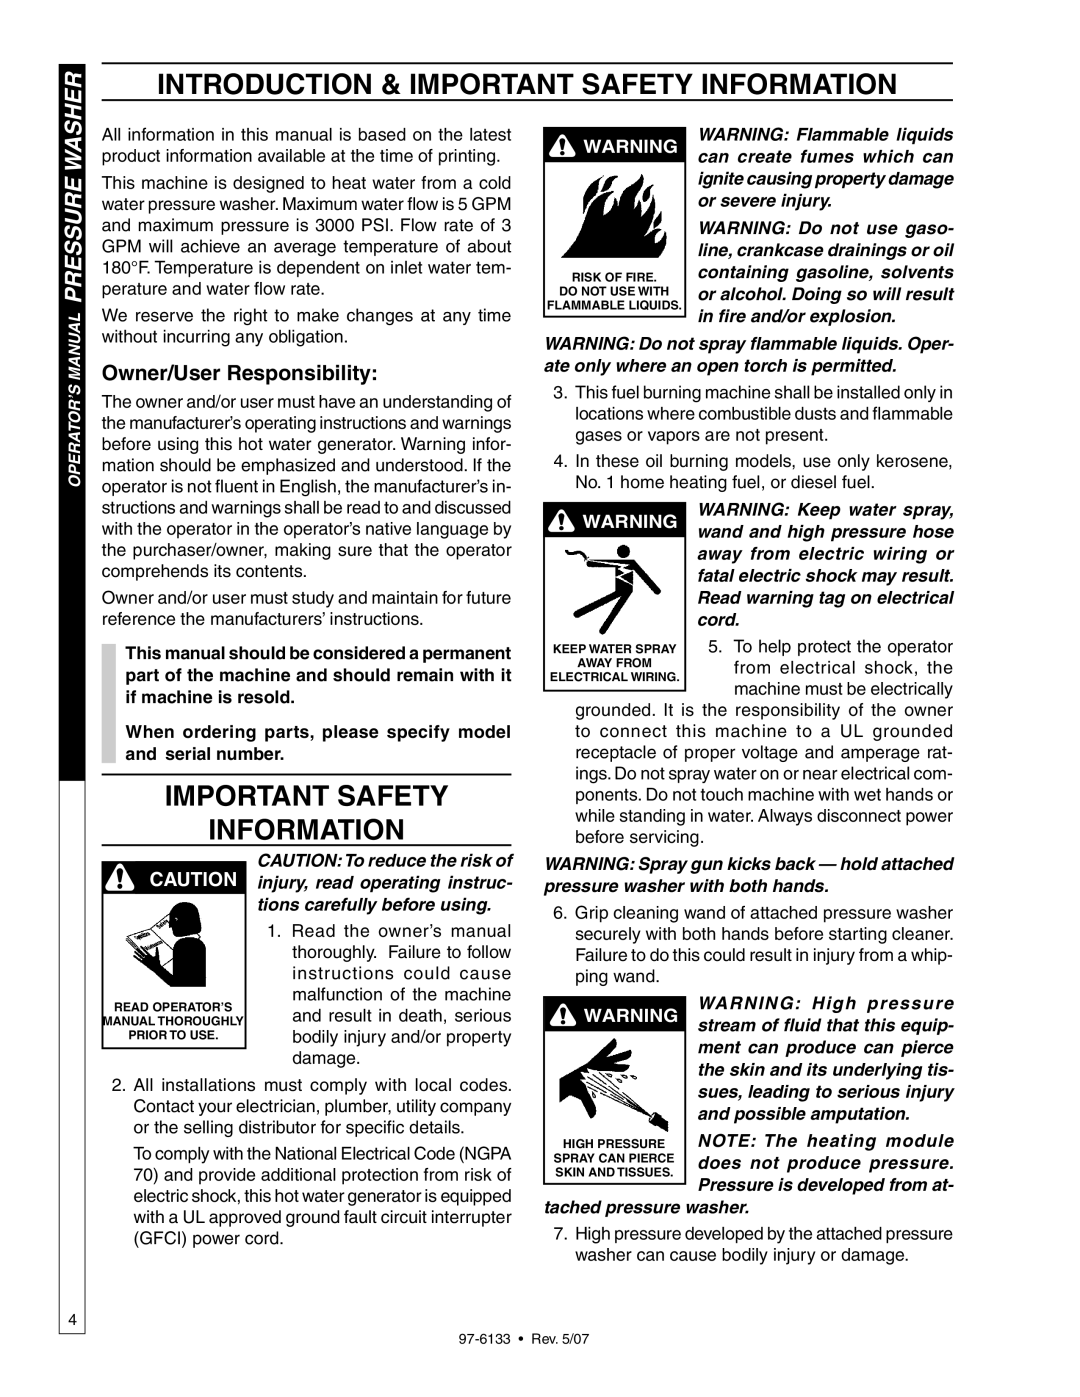 Shark HP-5030D manual INTRODUCTION & Important Safety Information, important SAFETY information, Washer, Pressure 